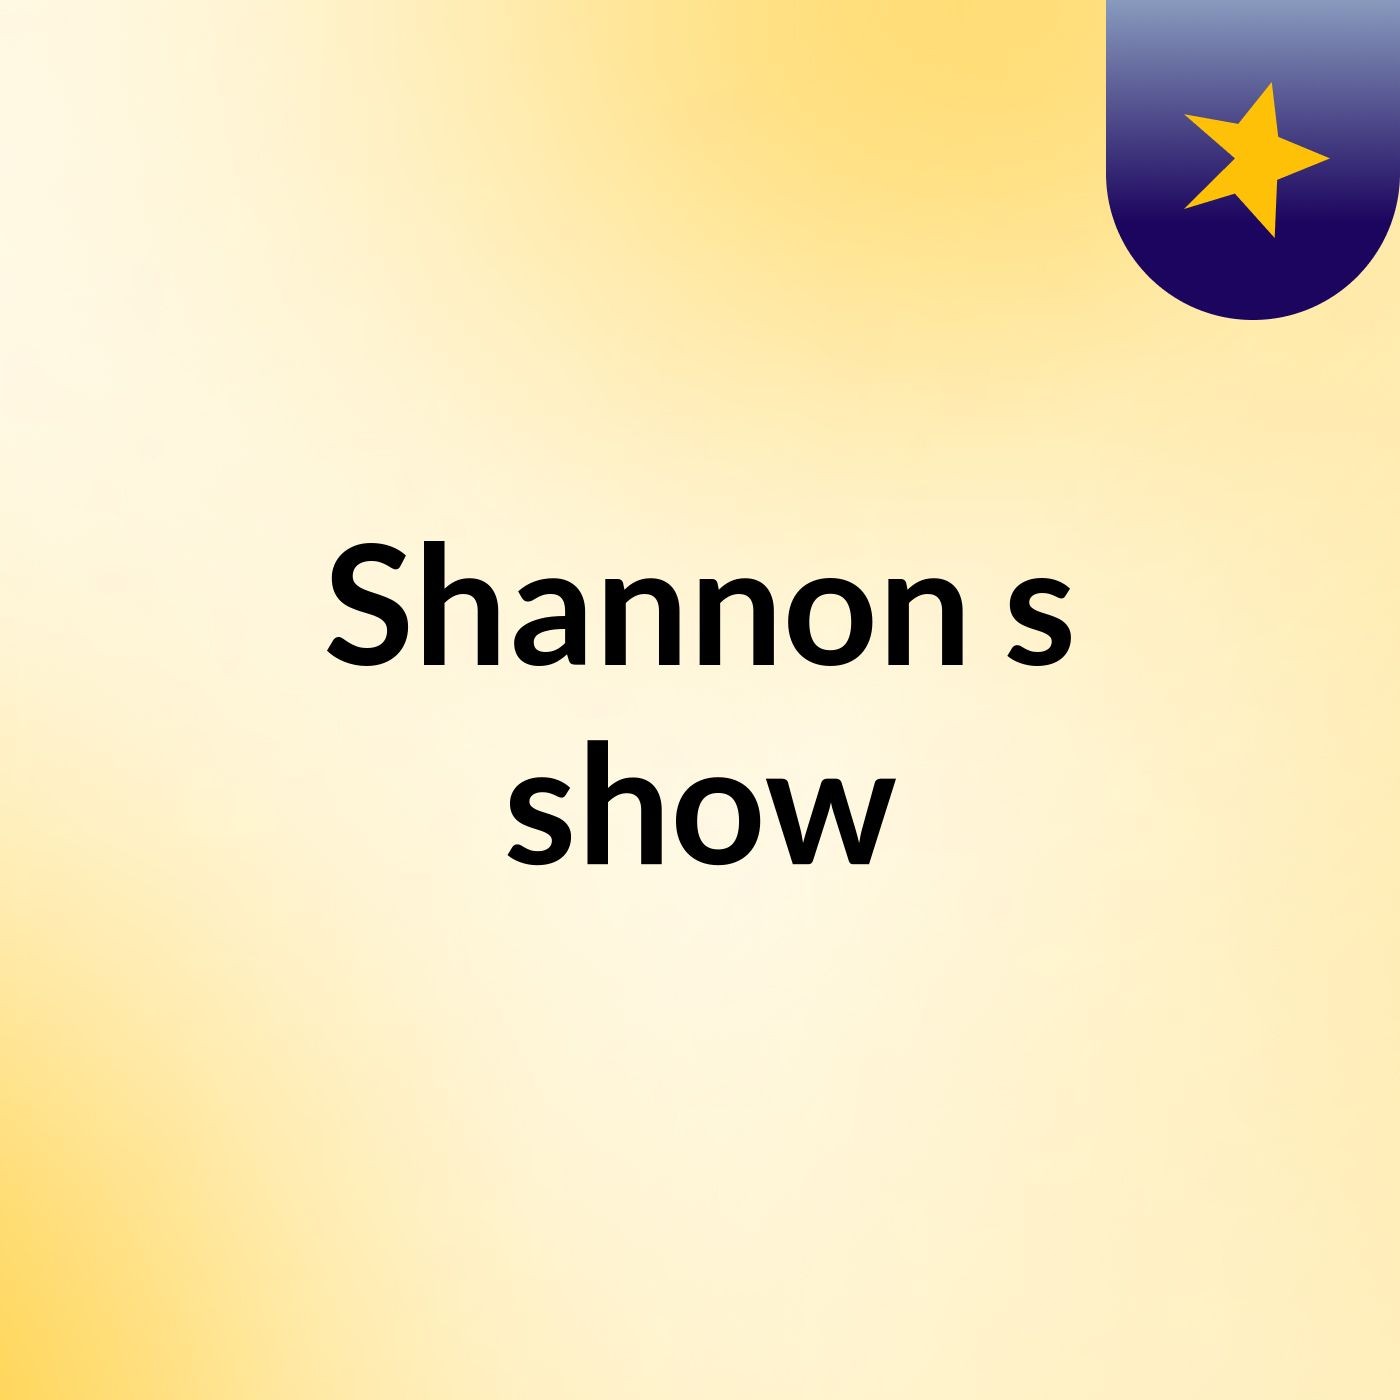 Shannon's show